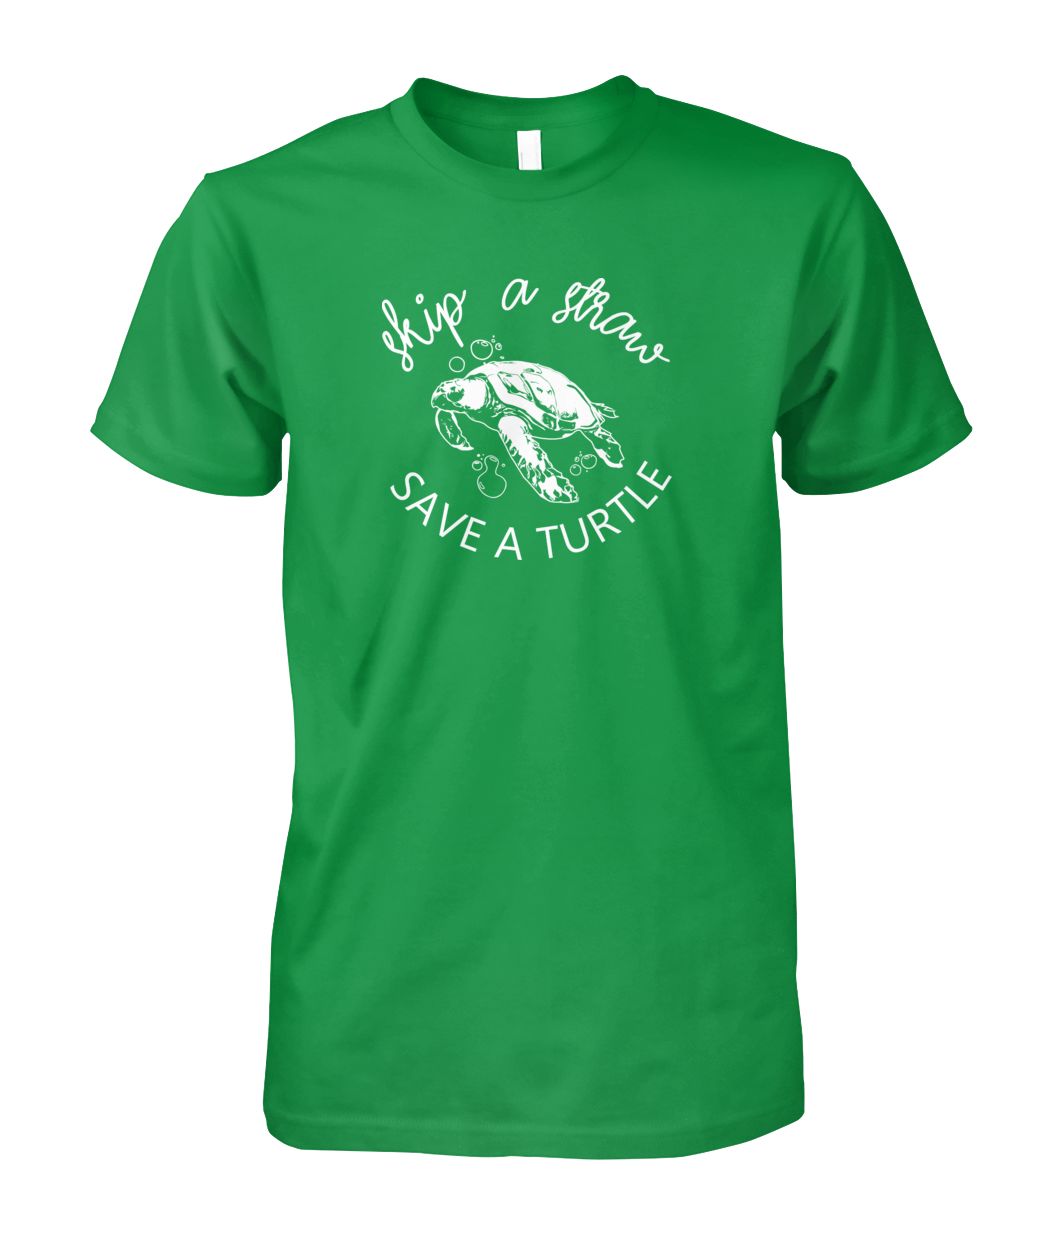 Skip A Straw, Save A Turtle T-Shirt